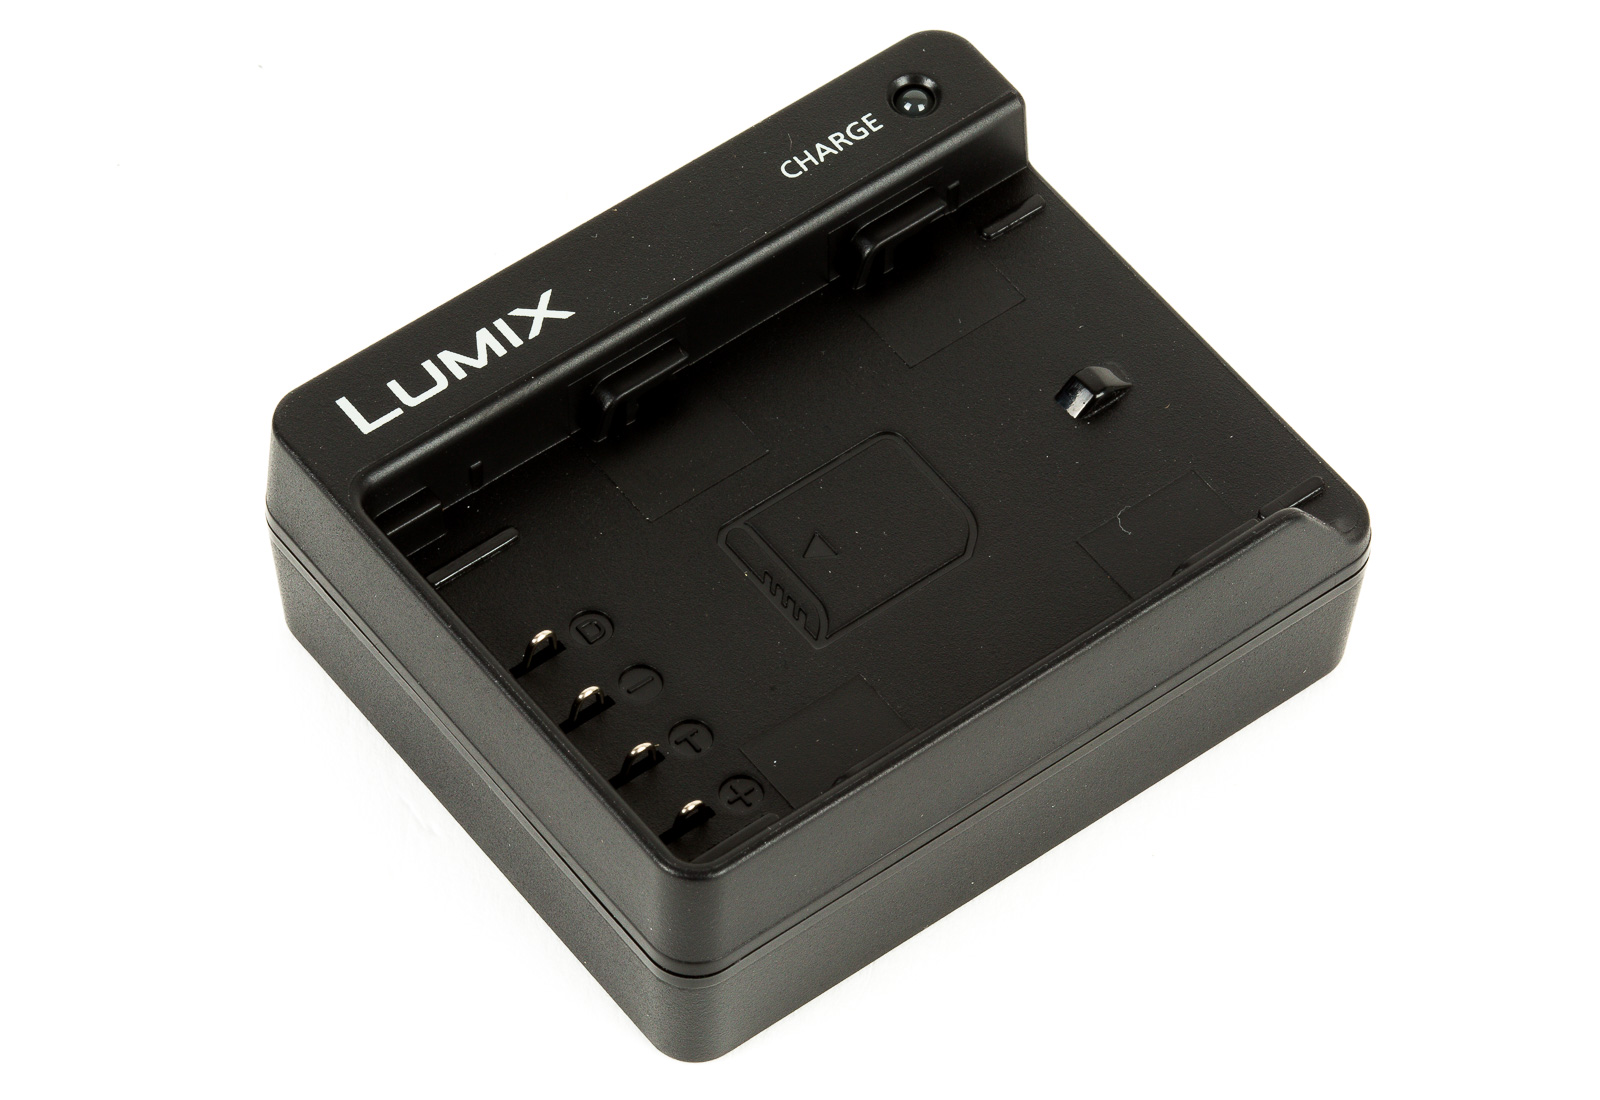 Lumix DMW-BTC12